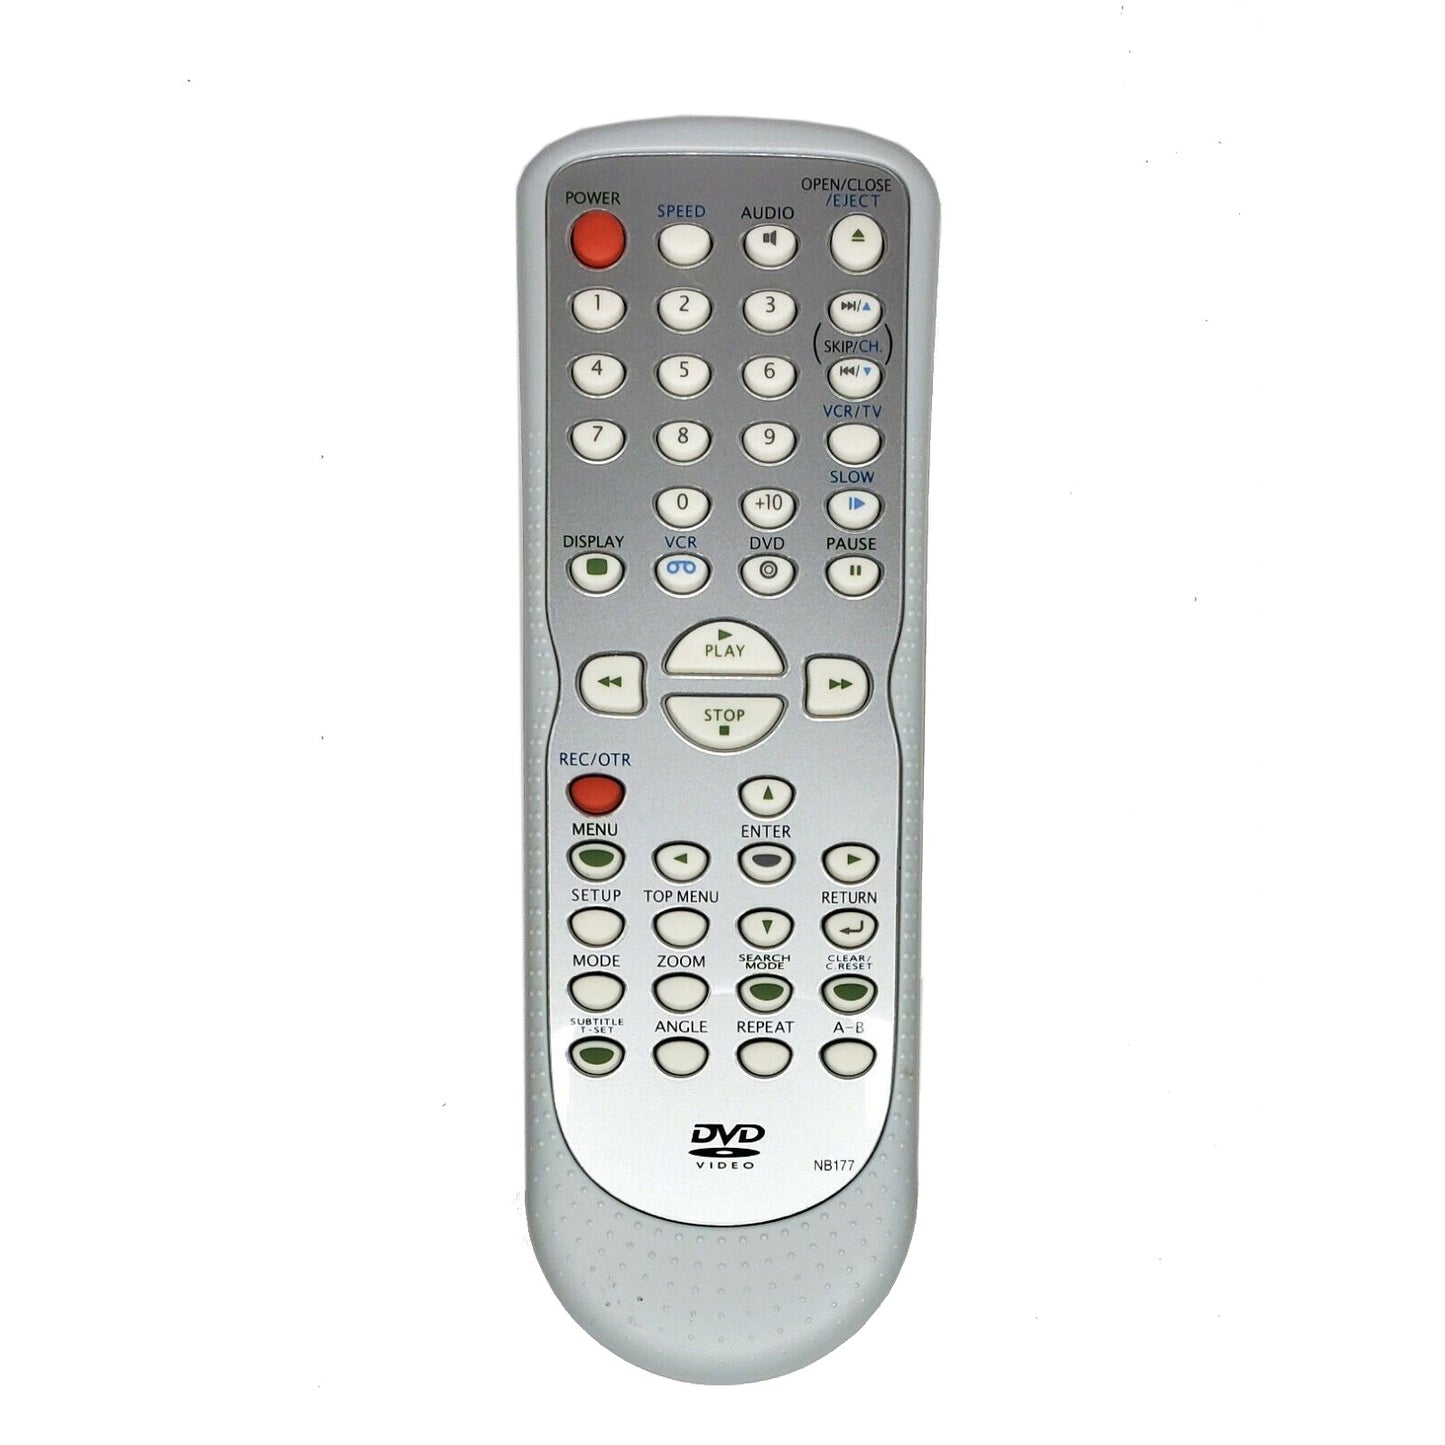 Sylvania DVC840G VCR/DVD Player Combo - Remote Control